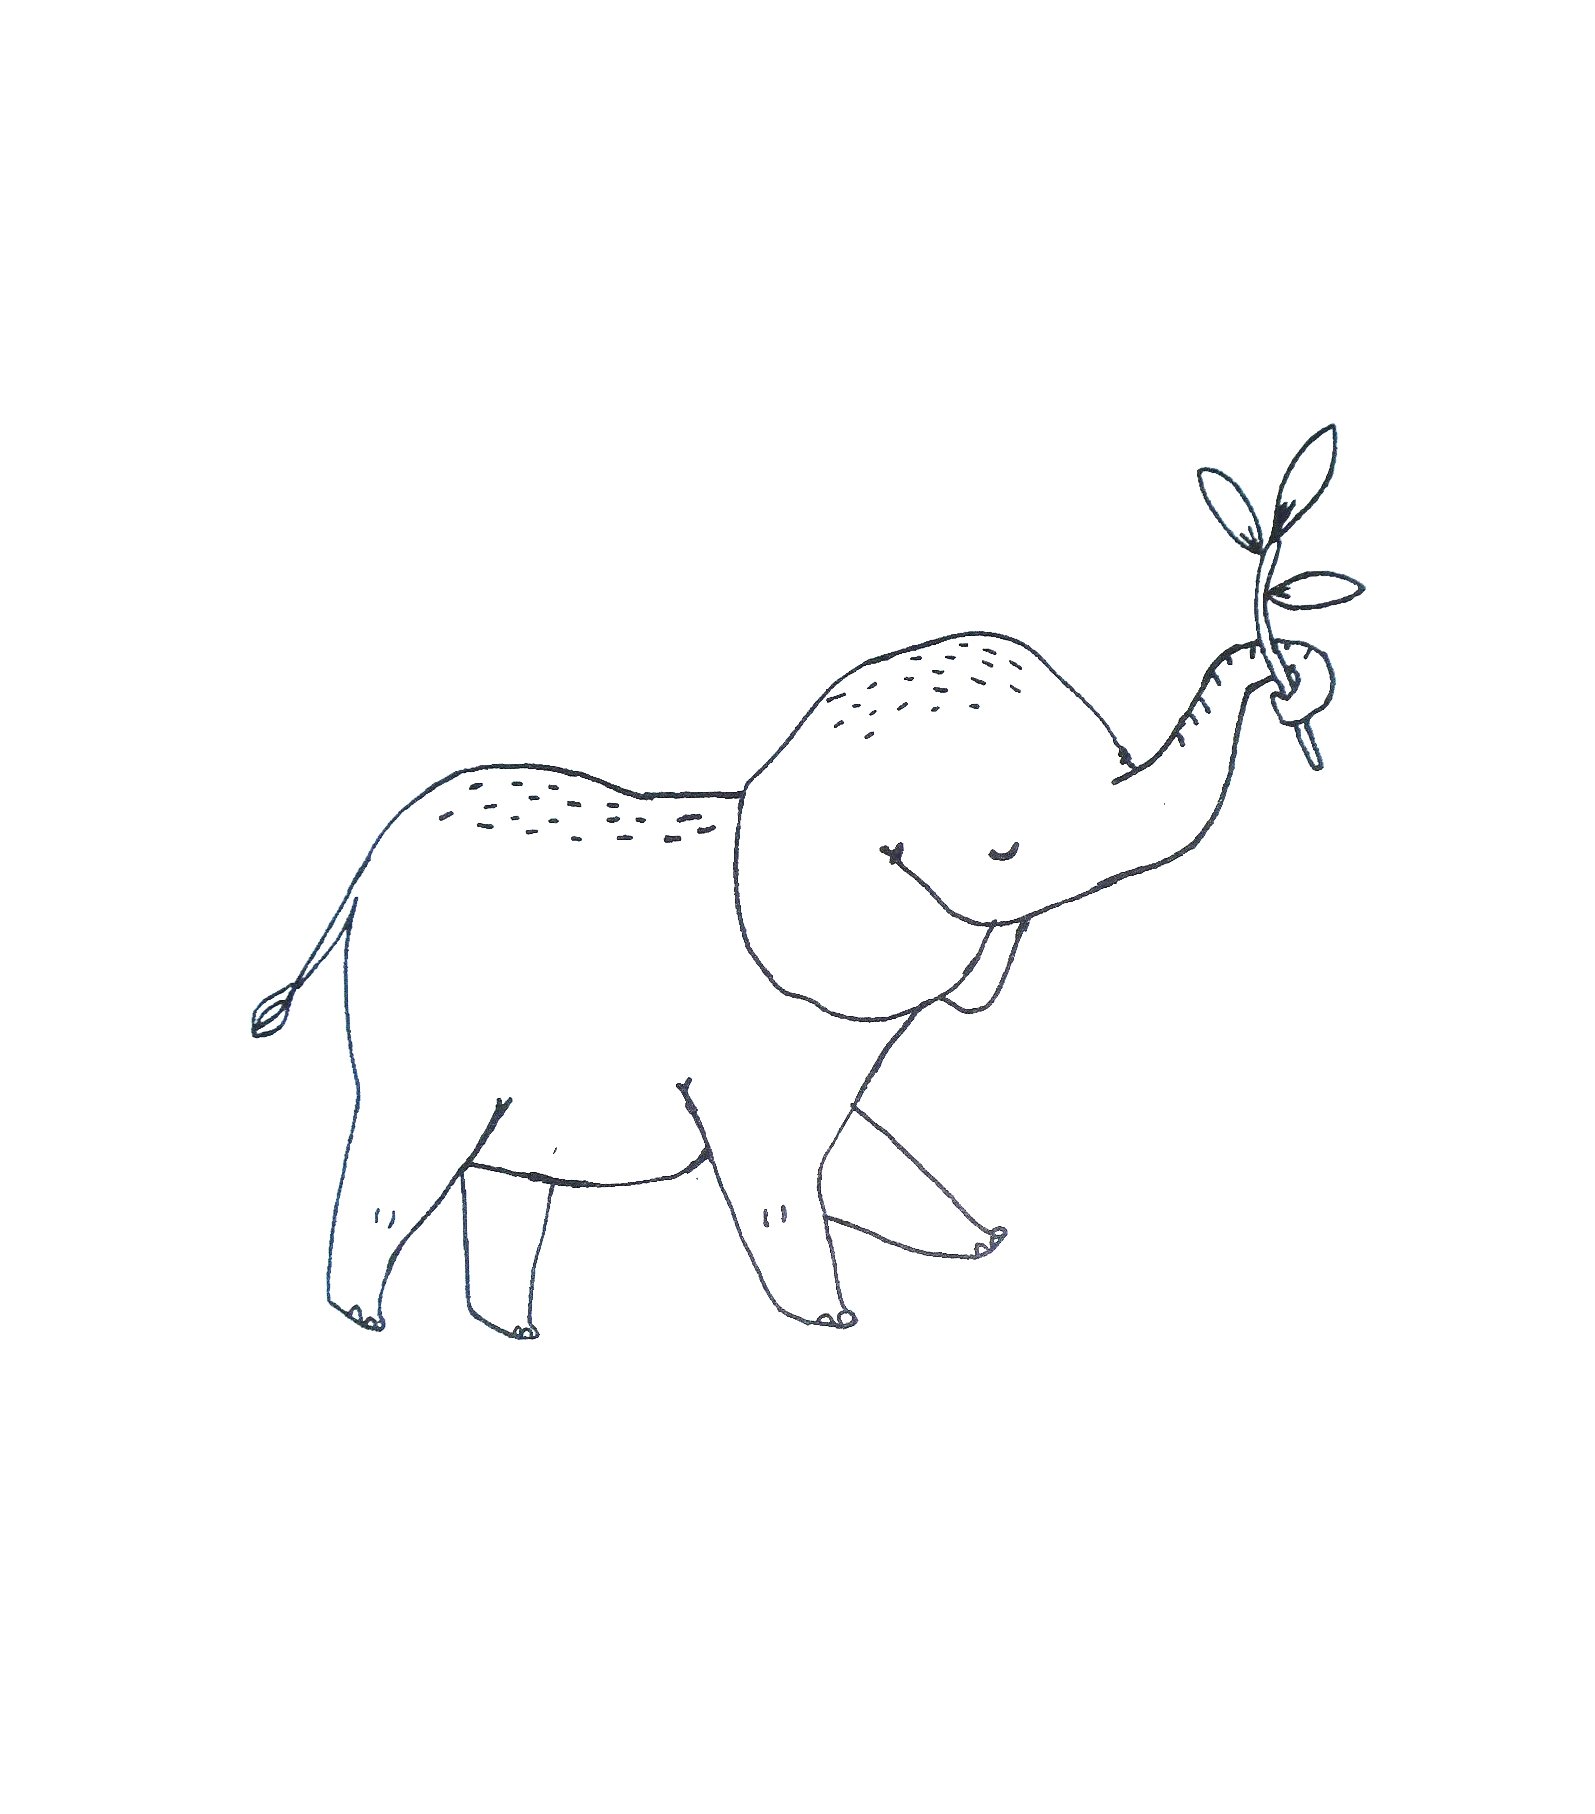 La-petite-encyclopedie-illustree-des-bebes-animaux-bebe-elephant